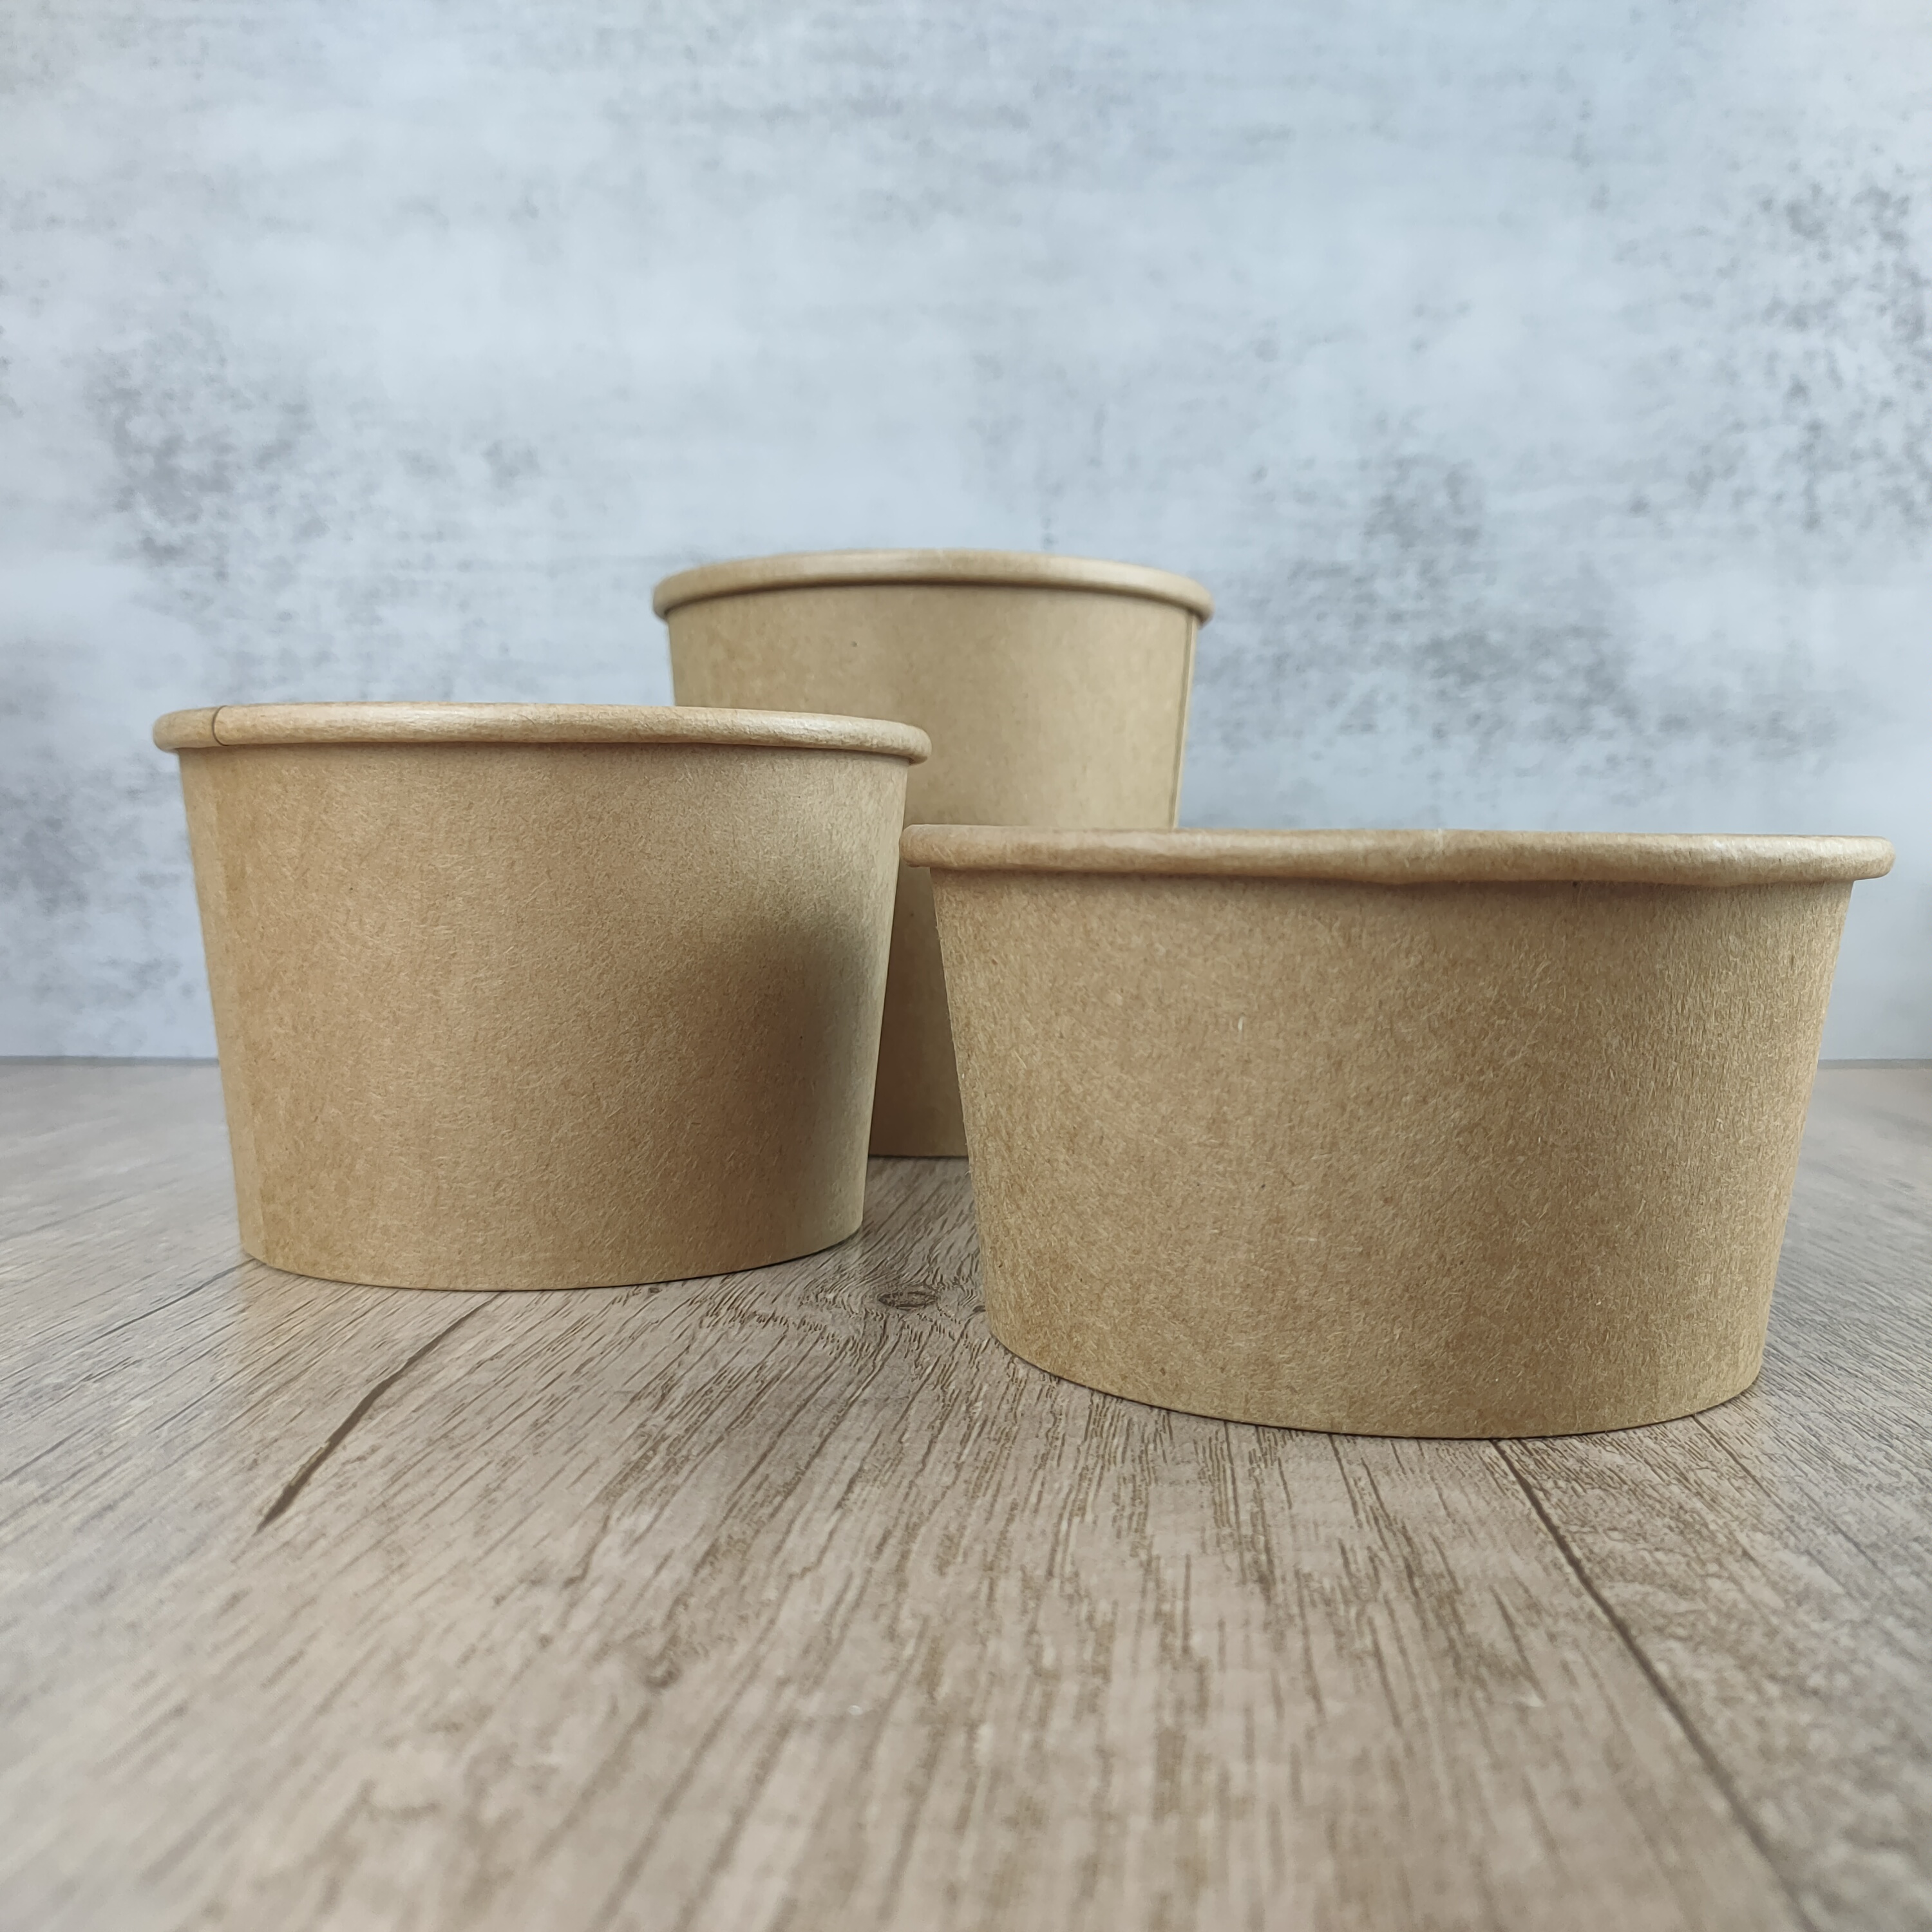 12oz/400ml Kraft Paper Bowls Disposable Salad Bowls Disposable Round Bowls Paper Cups To Serve Food Suitable for Party Gym 